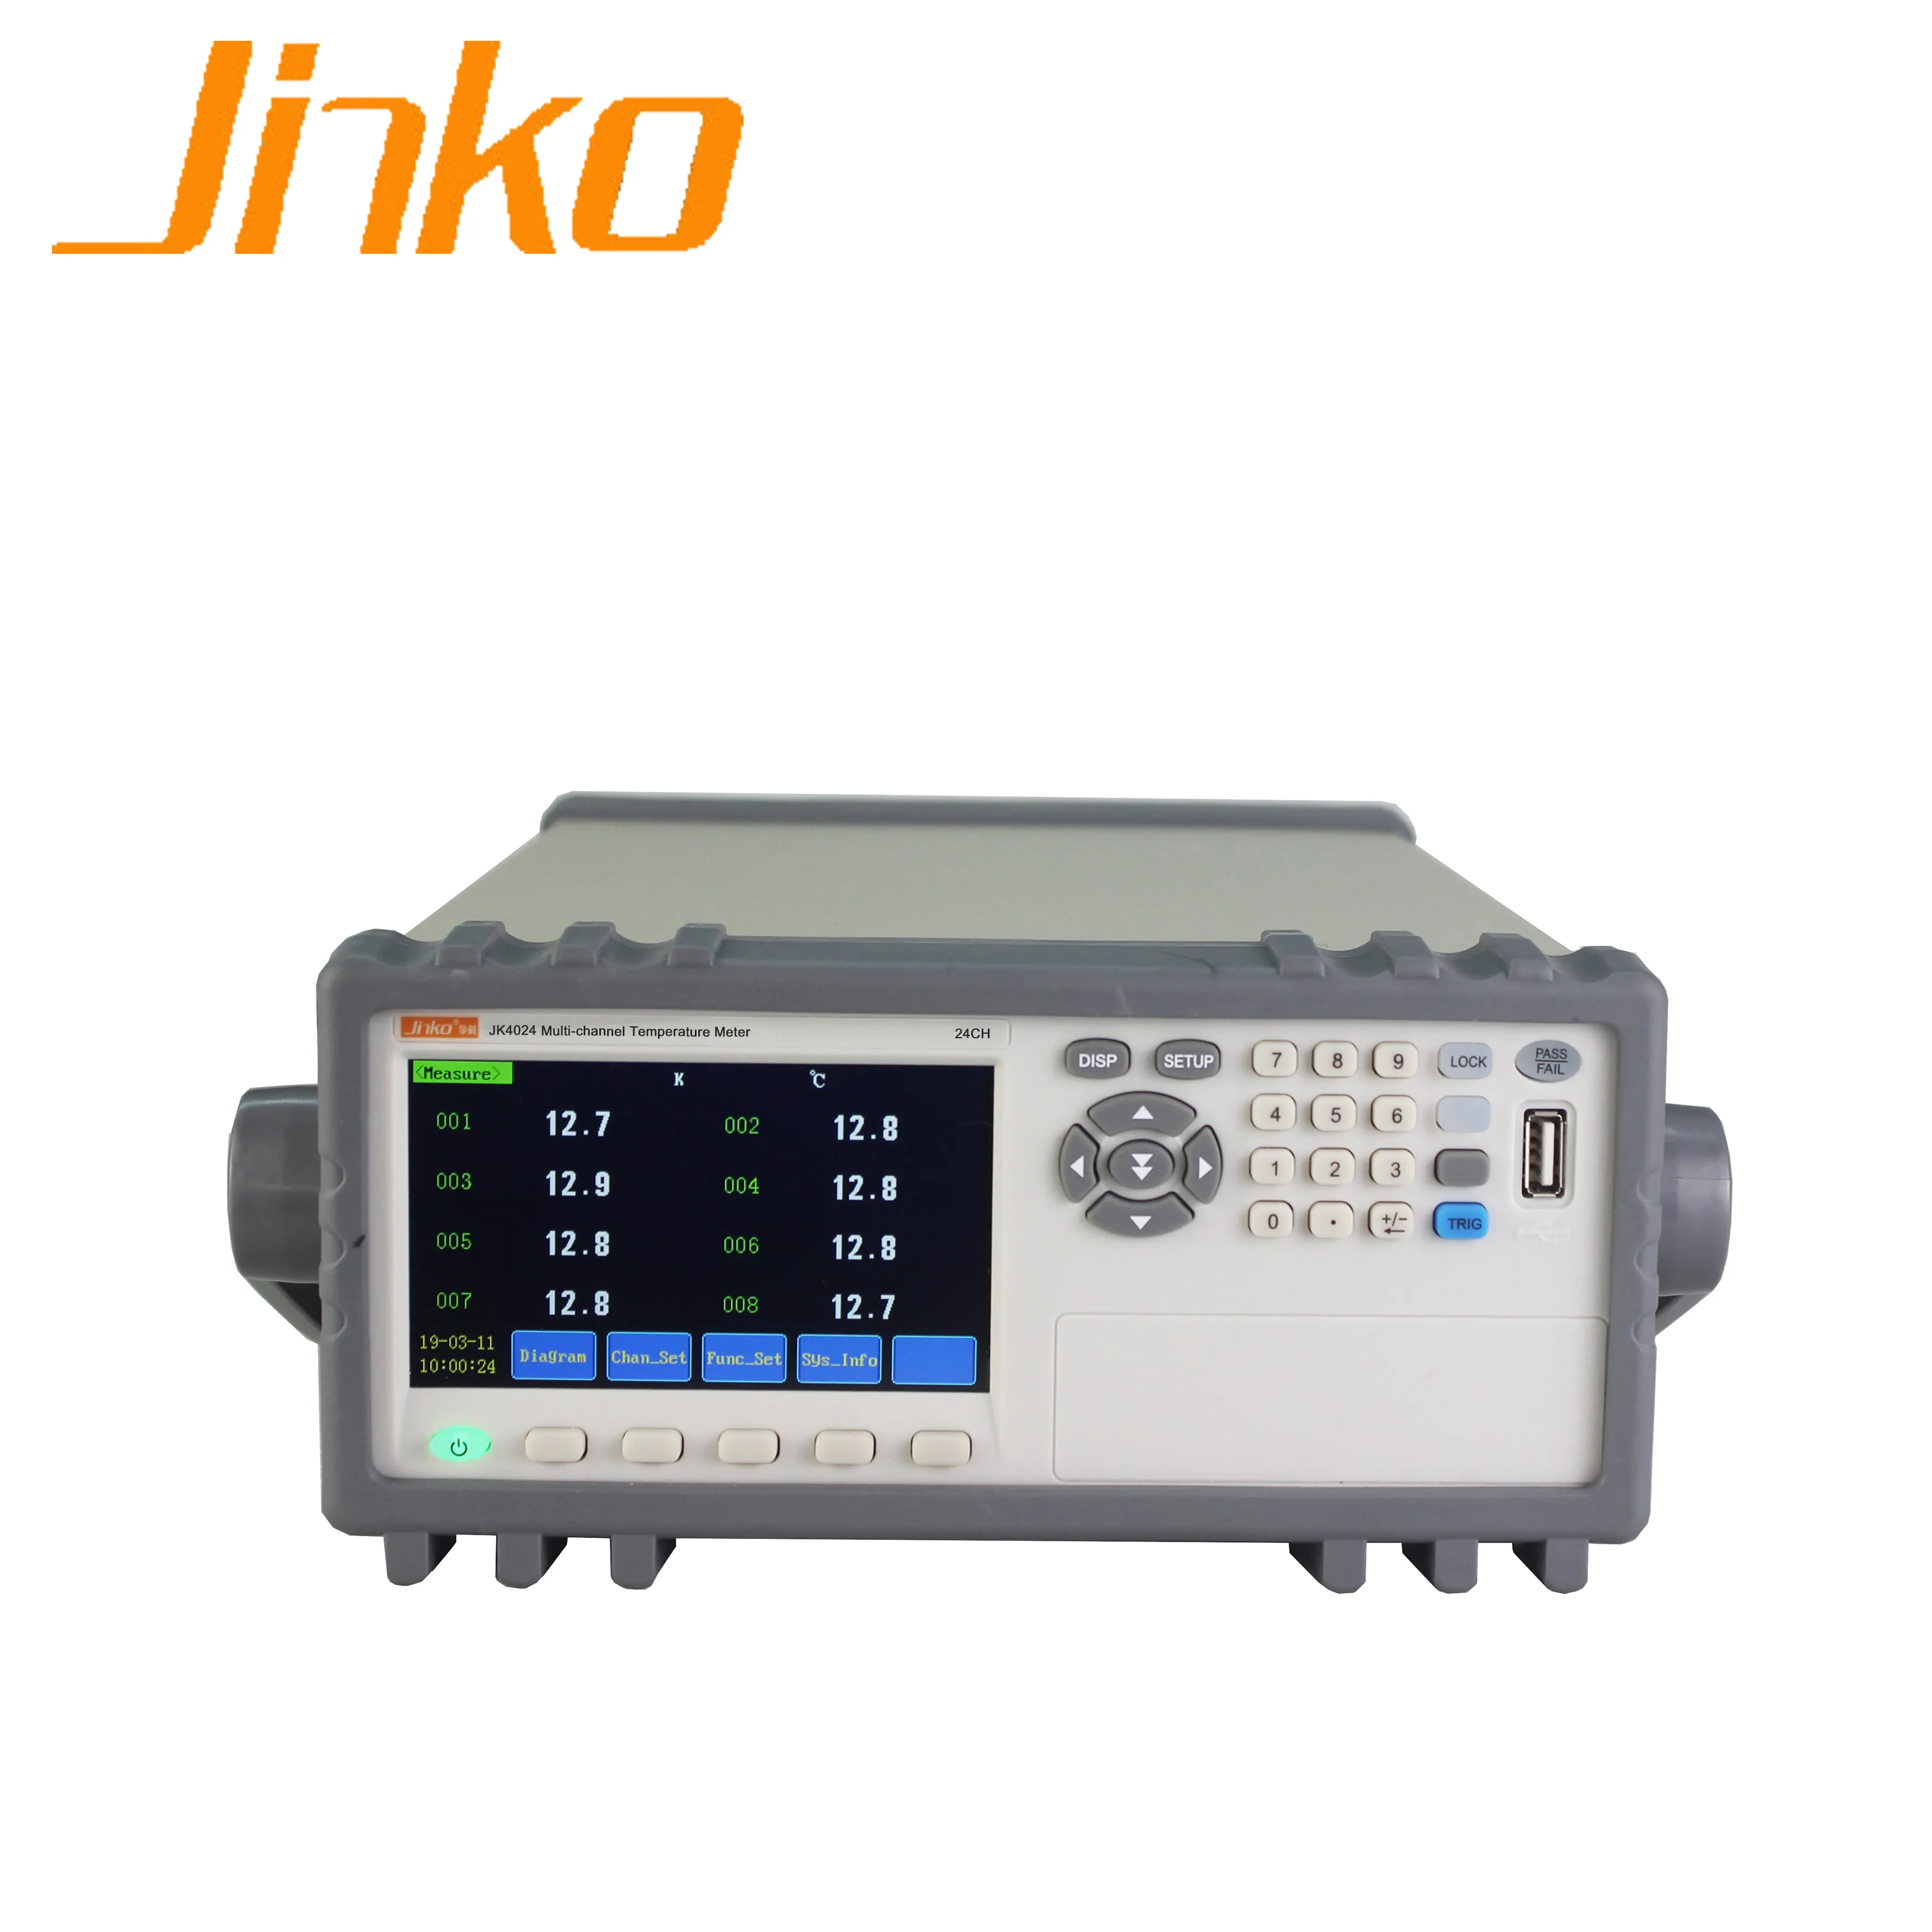 Jinkoホット販売JK4024マルチチャンネル温度レコーダー-200C-1800Cテスト範囲データロガー付き